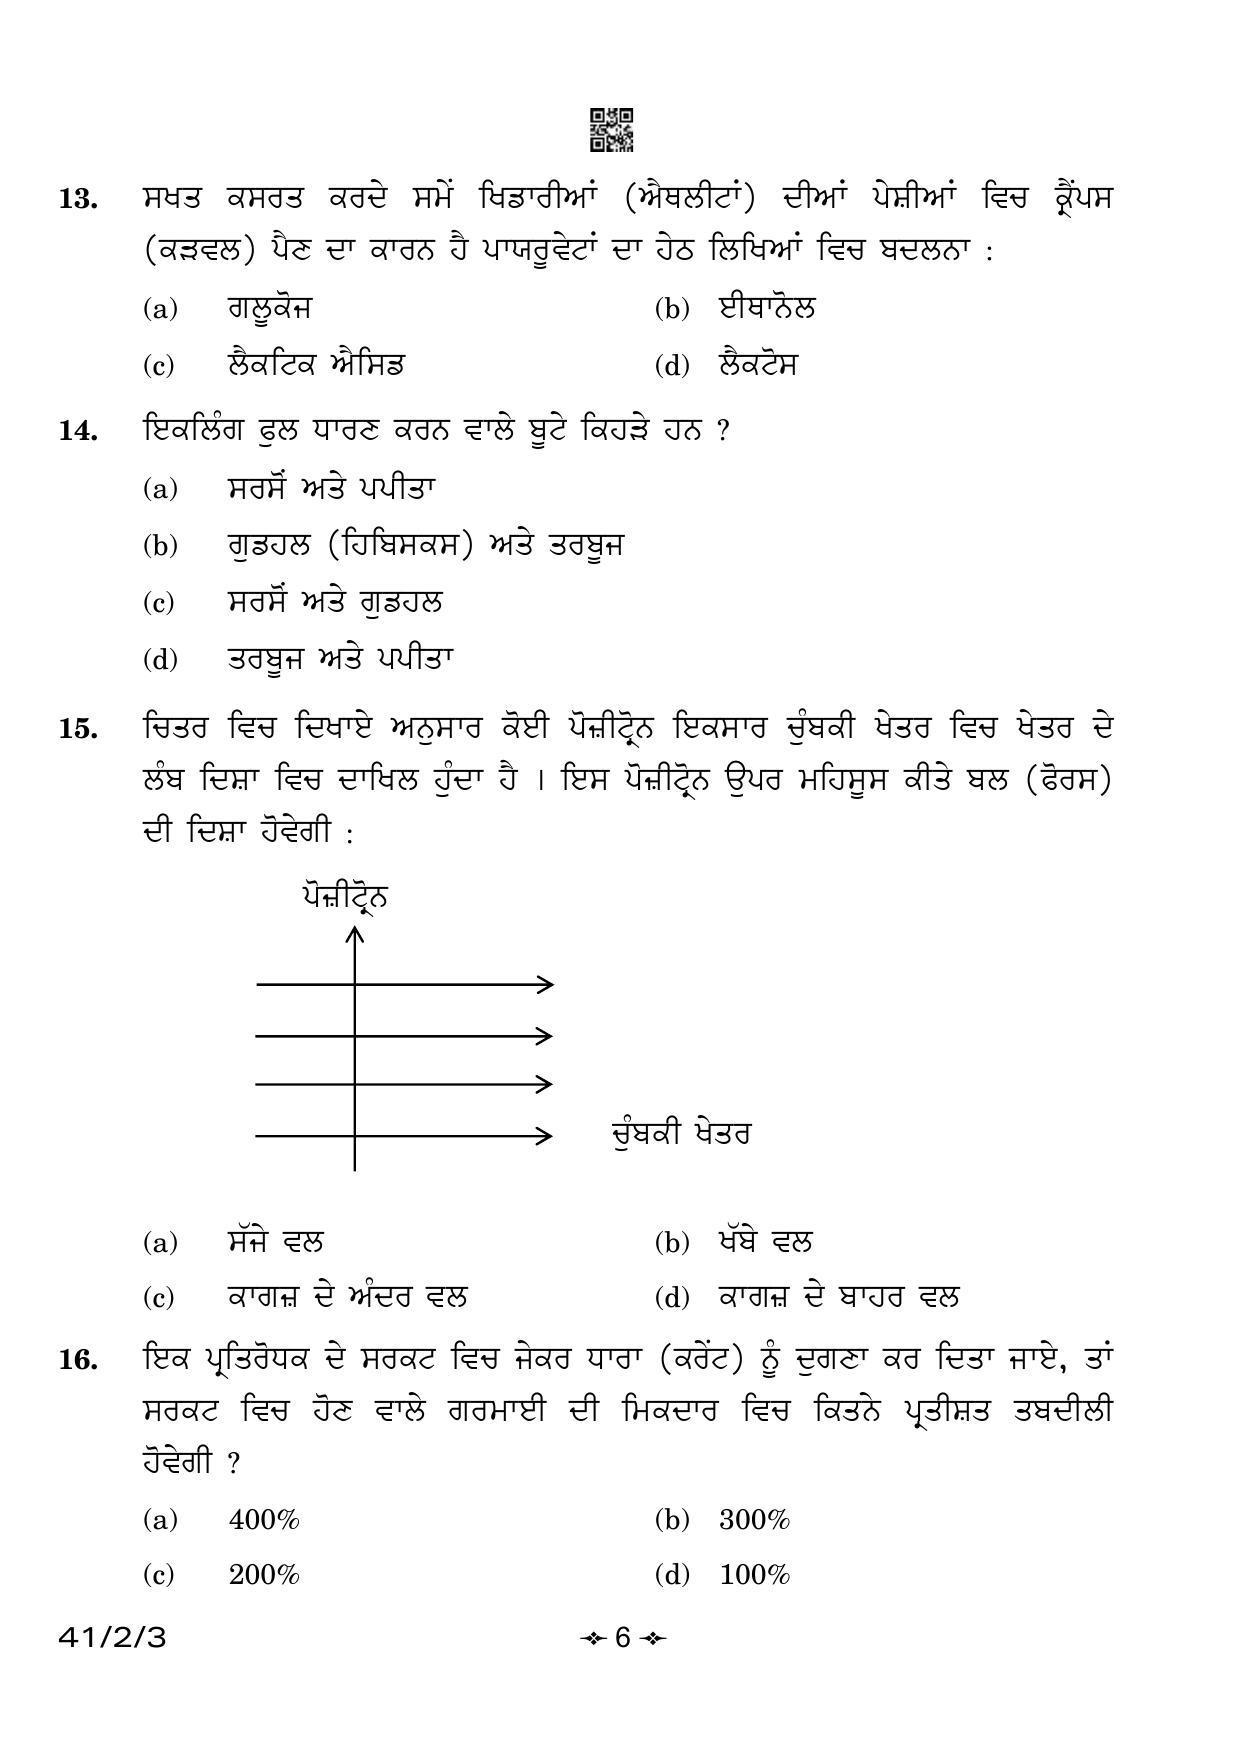 CBSE Class 10 41-2-3 Science Punjabi Version 2023 Question Paper - Page 6